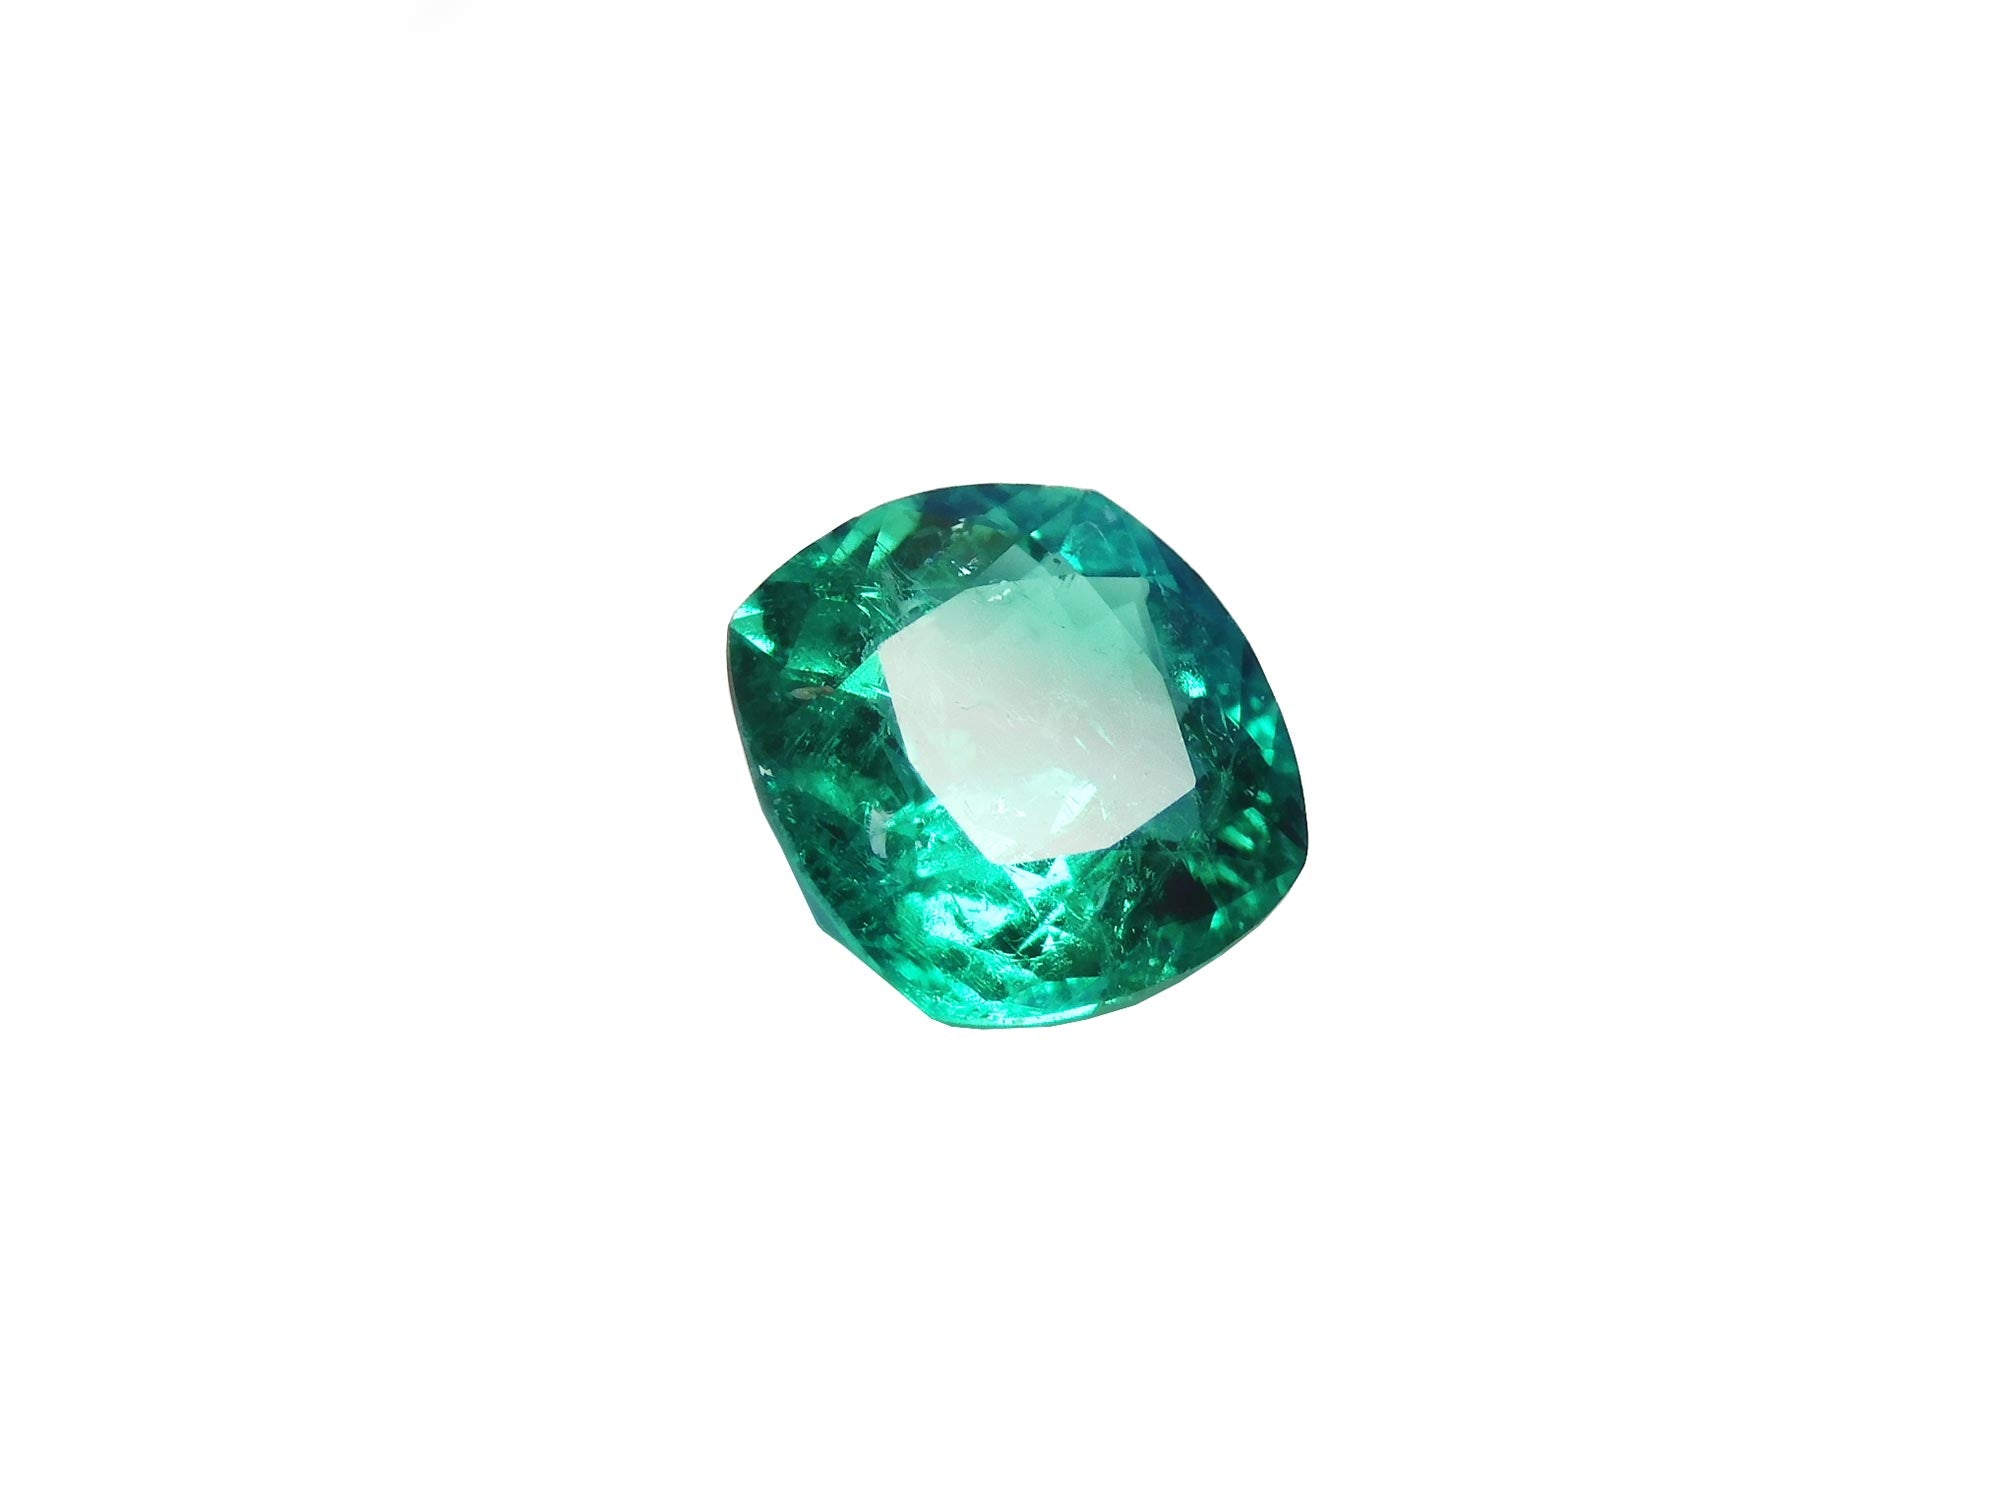 Loose genuine emerald for sale